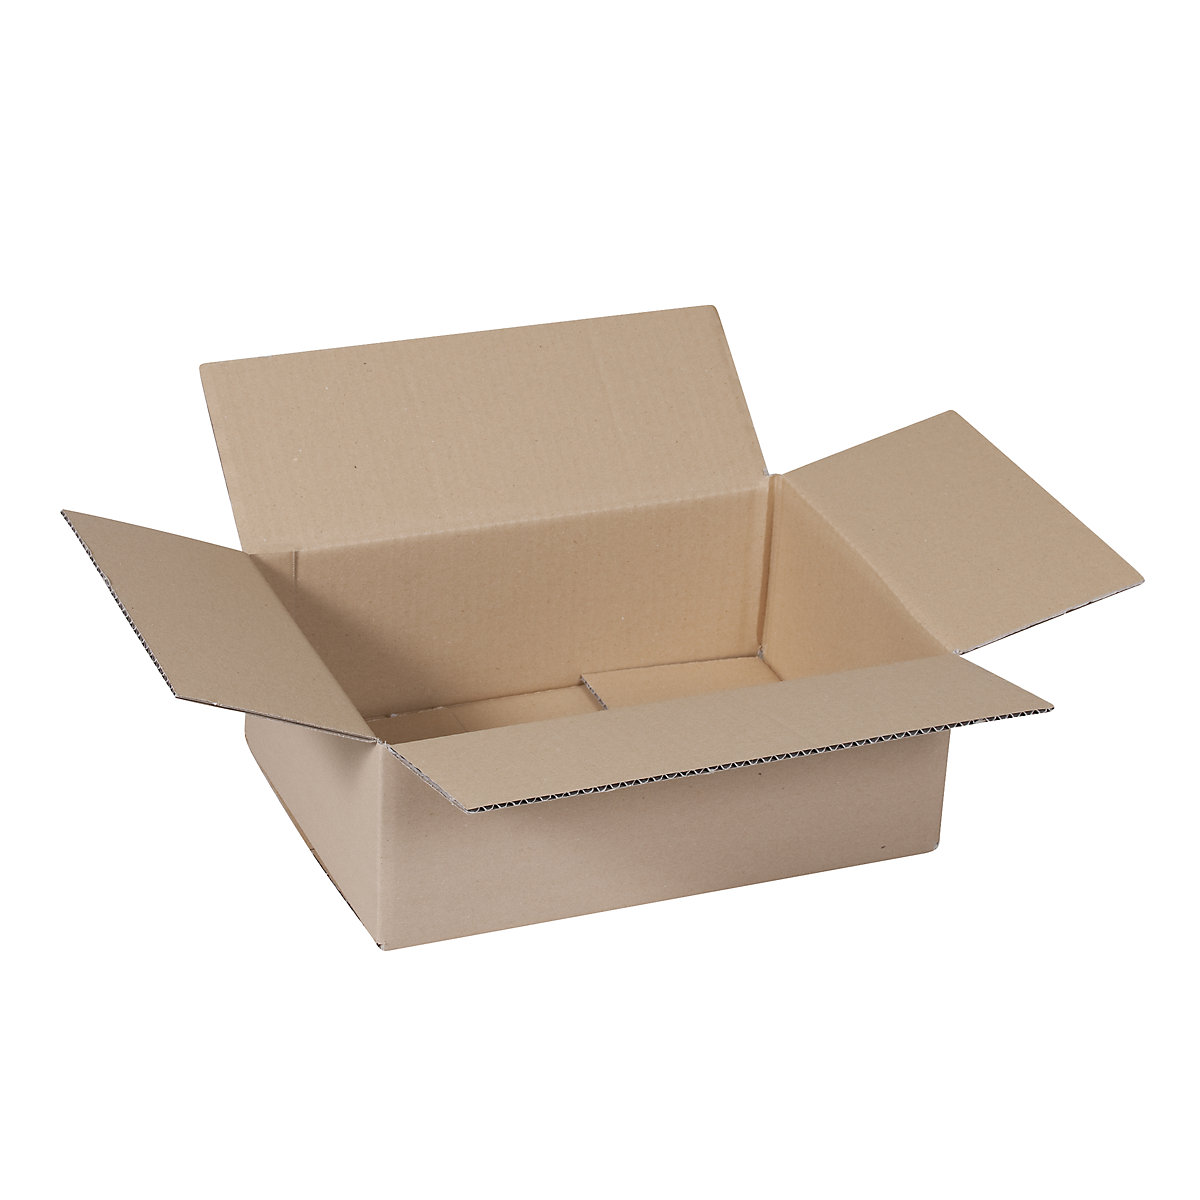 Folding cardboard box, FEFCO 0201, made of single fluted cardboard, internal dimensions 340 x 200 x 150 mm, pack of 50-18